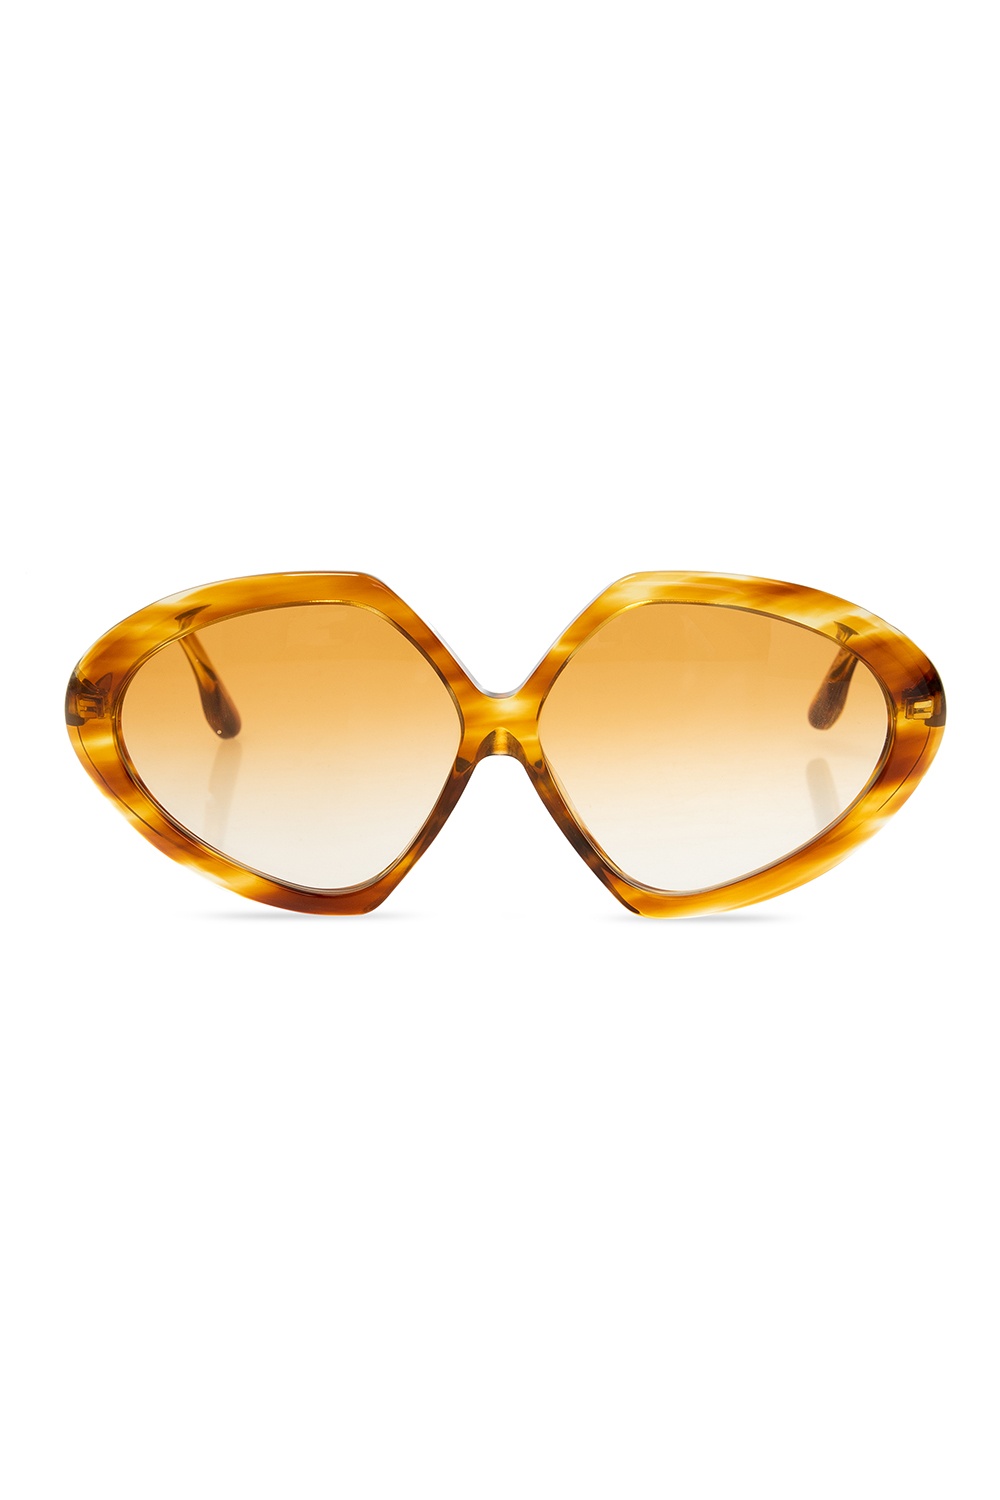 Victoria Beckham Saint Laurent Eyewear SL 423 cat-eye sunglasses